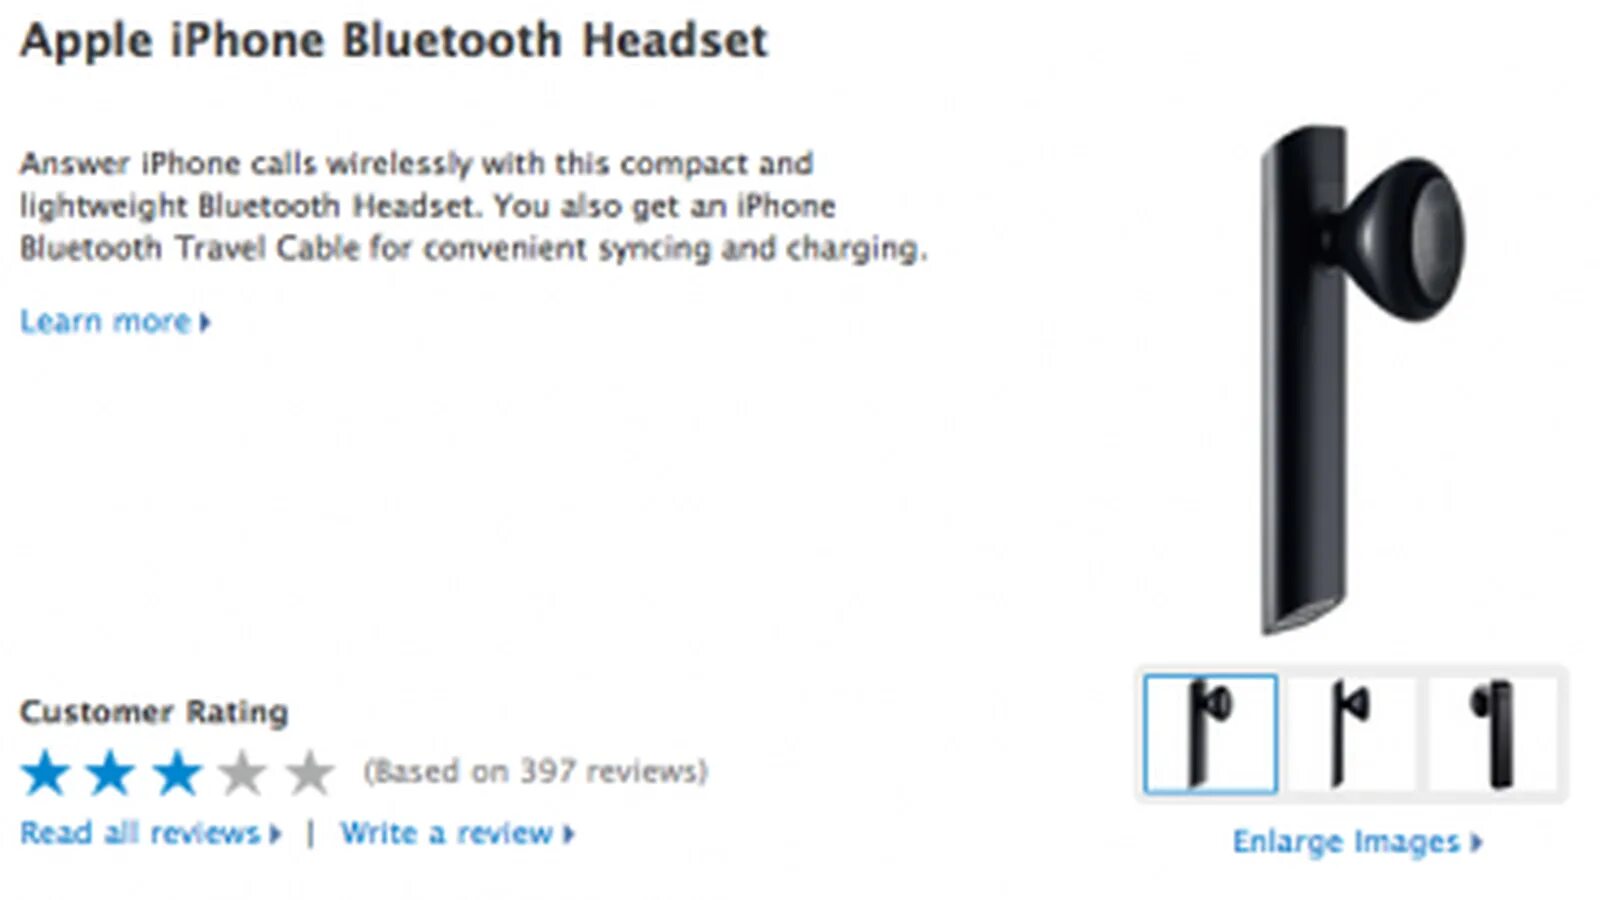 Iphone Bluetooth Headset. Bluetooth гарнитура Apple для iphone 2g. Аррlе a1221 IРHОNE Вluеtооth Hеadsеt. Гарнитура Bluetooth Apple автоответом.